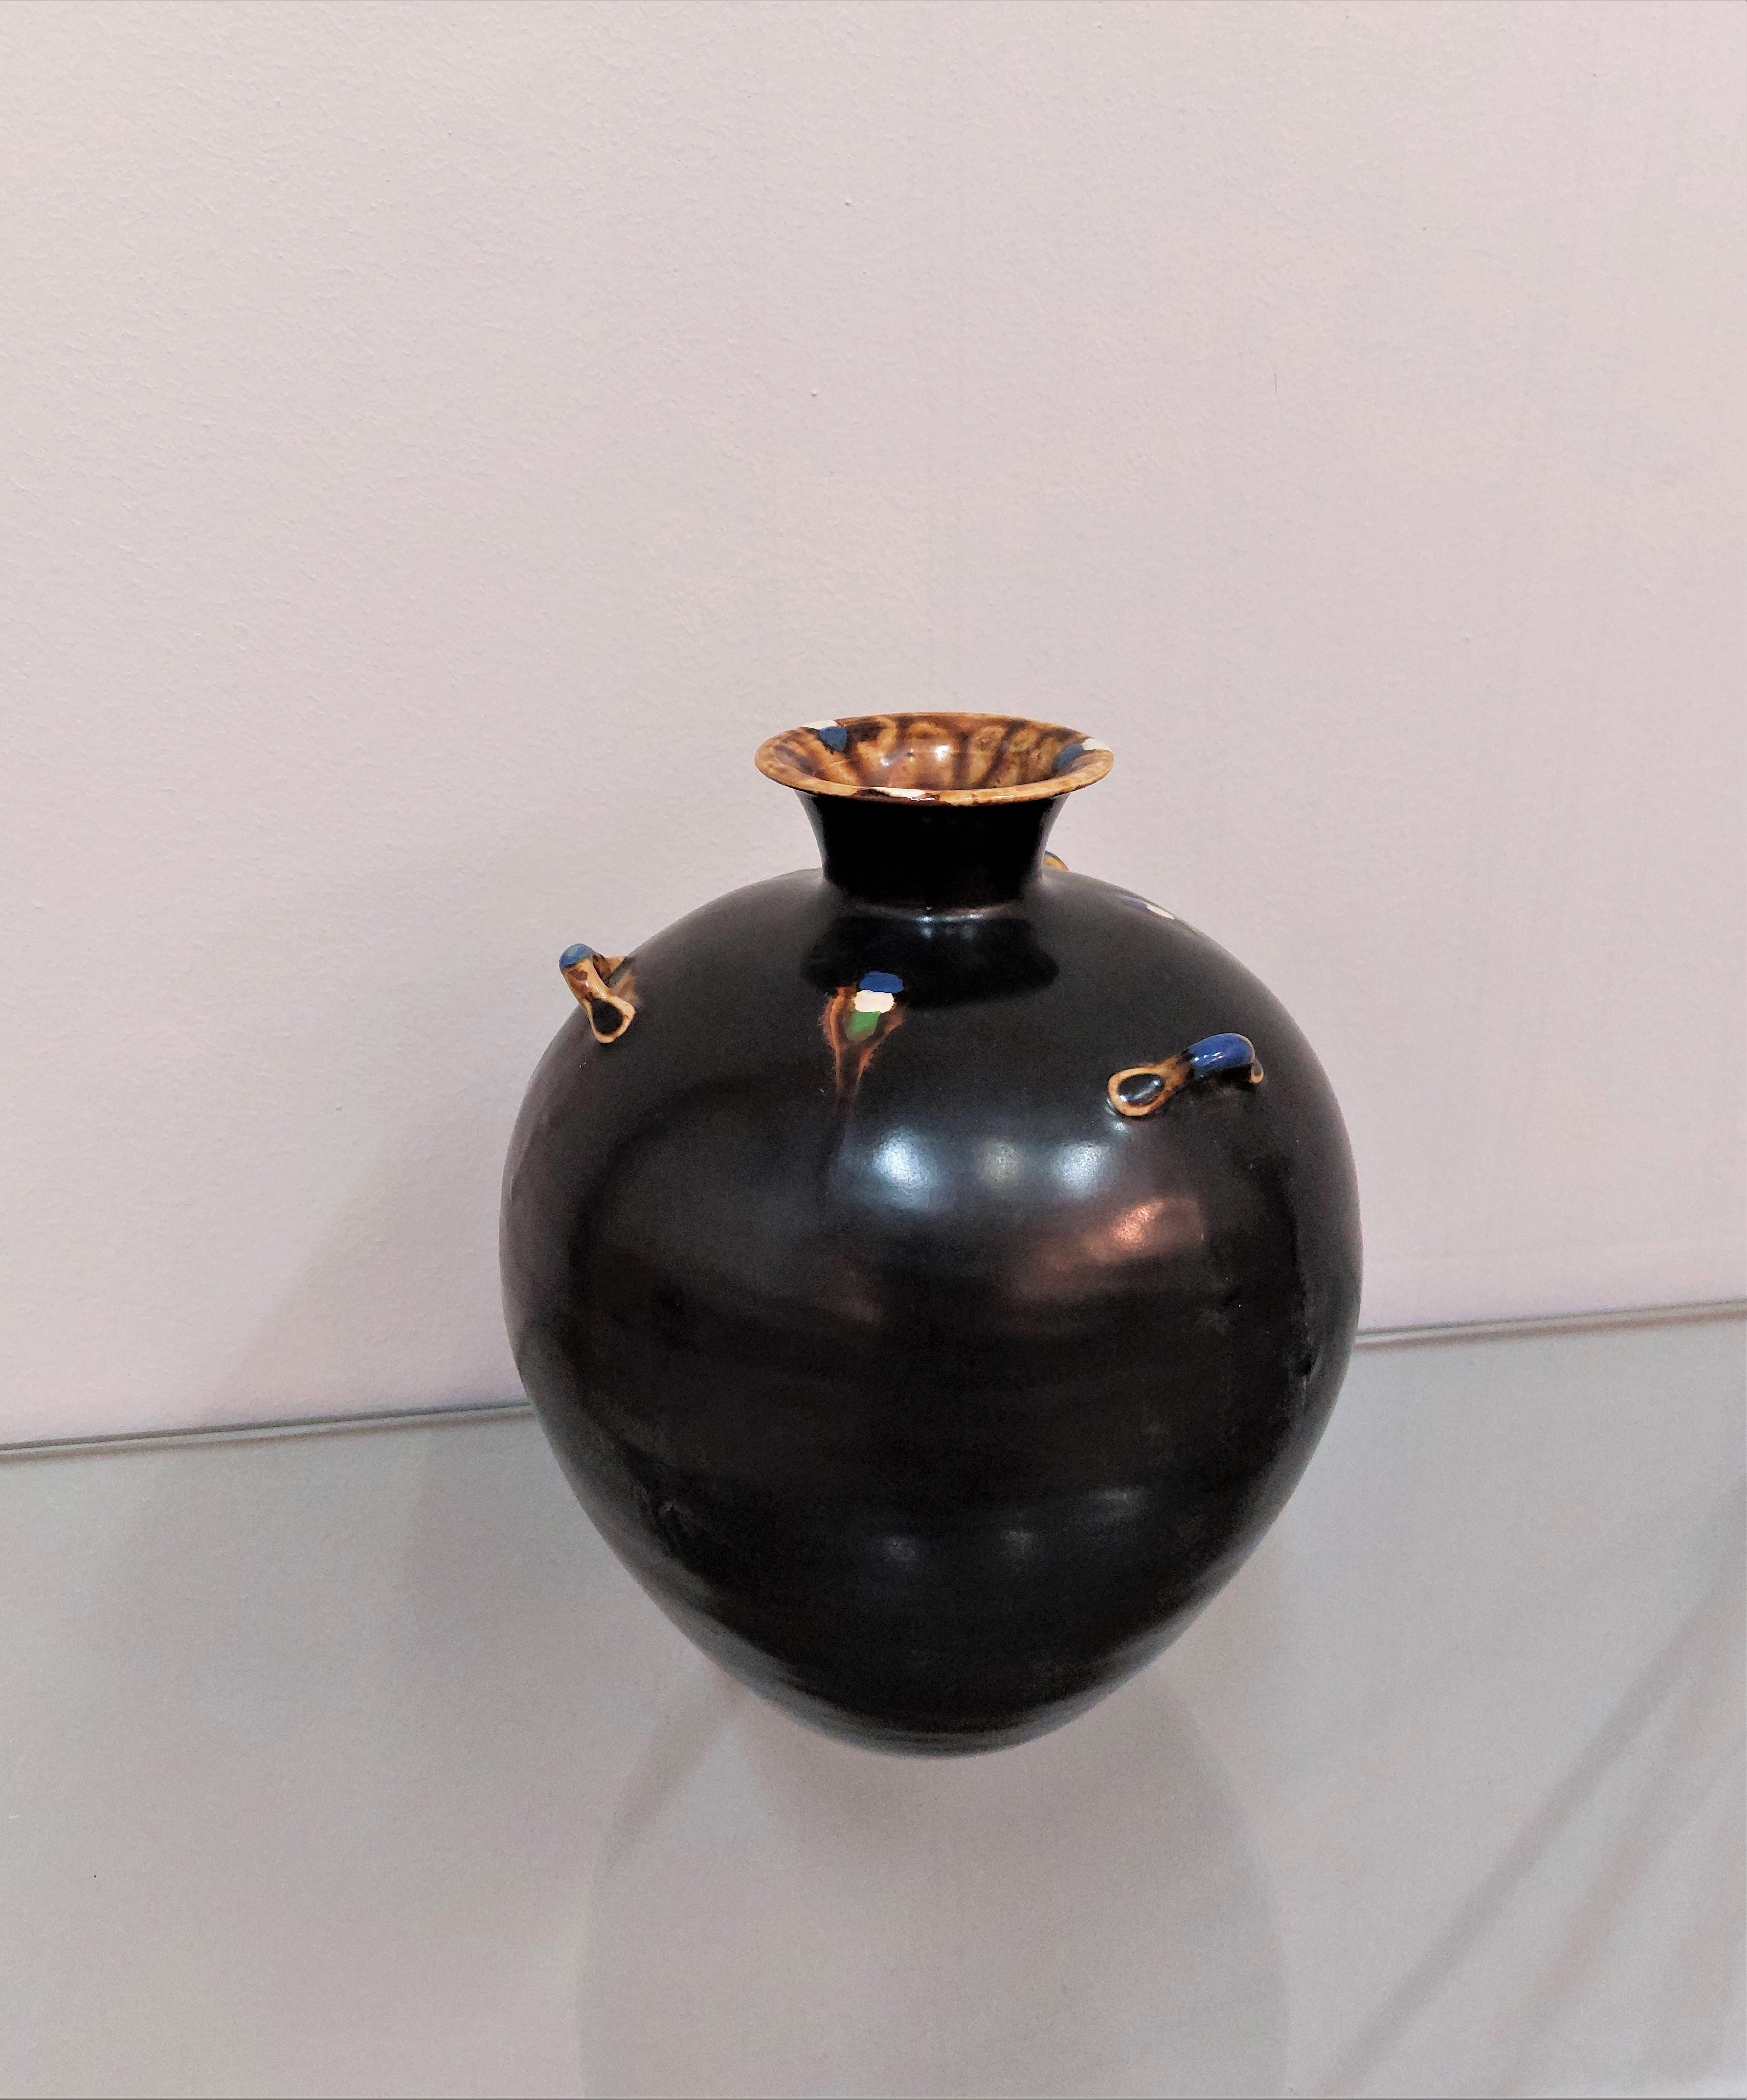 Decorative Object Ceramic Vase Enameled Black Midcentury Italian Design 1950s